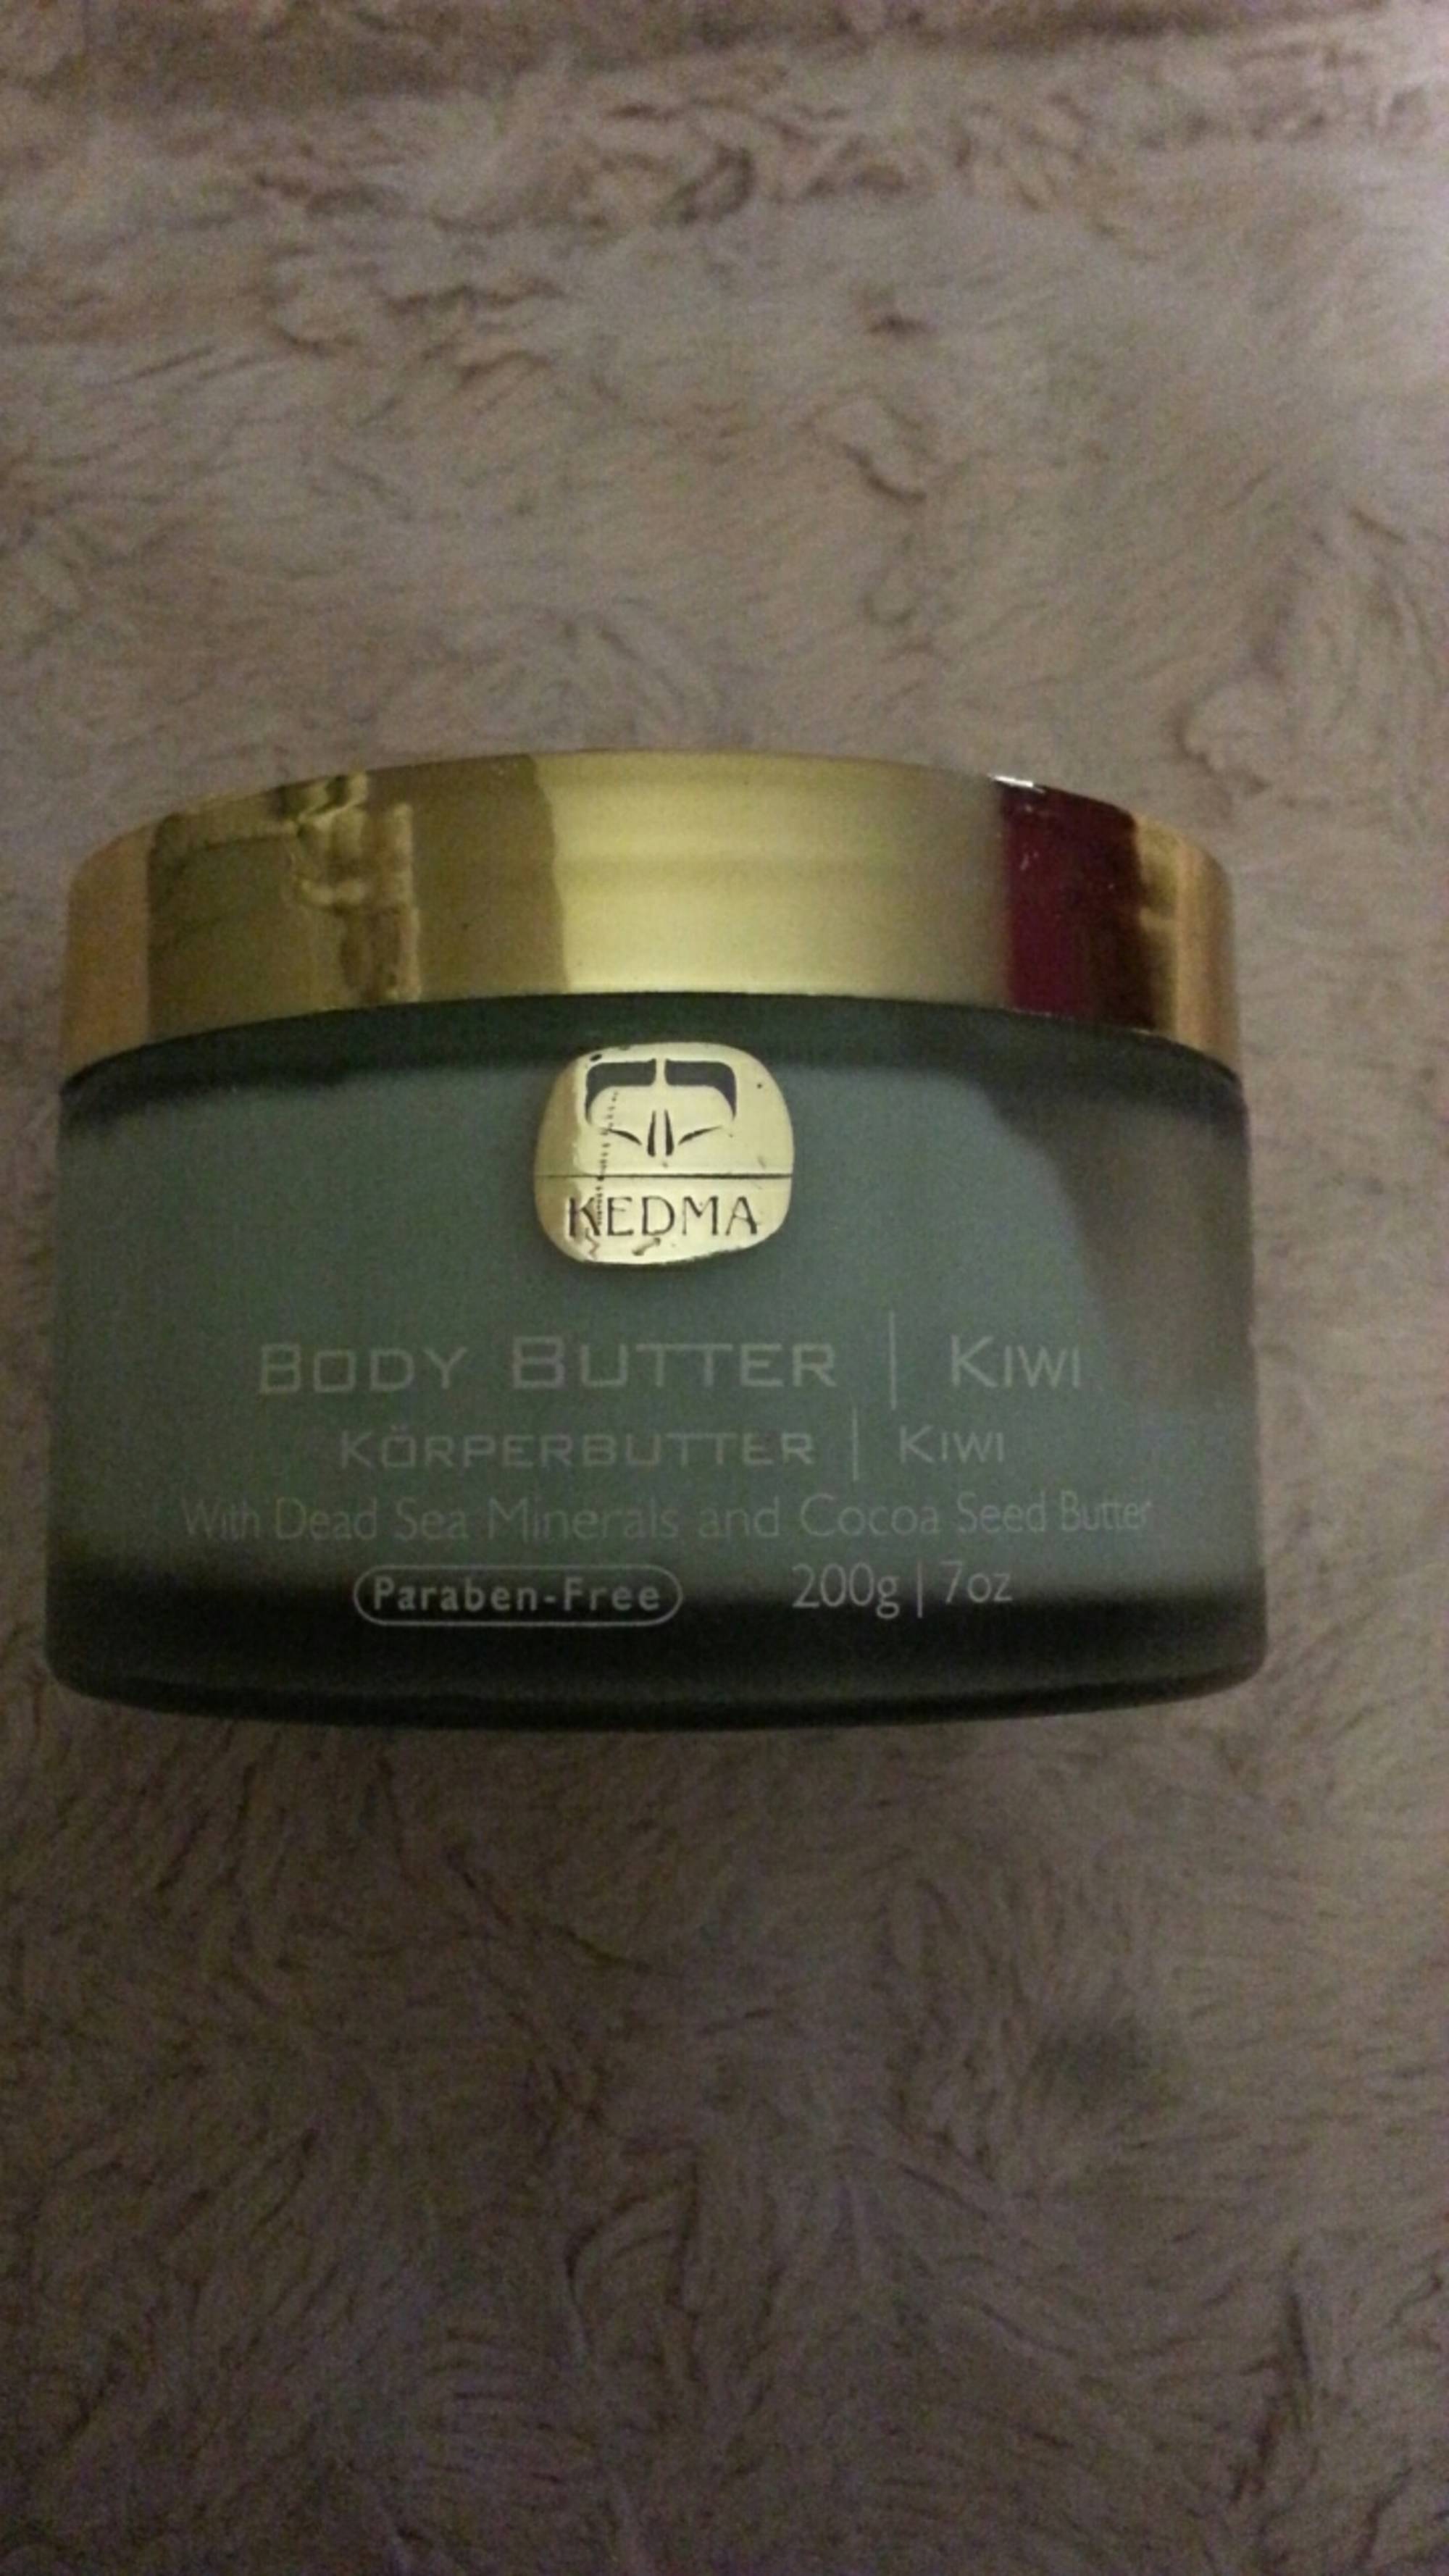 KEDMA - Kiwi - Body butter